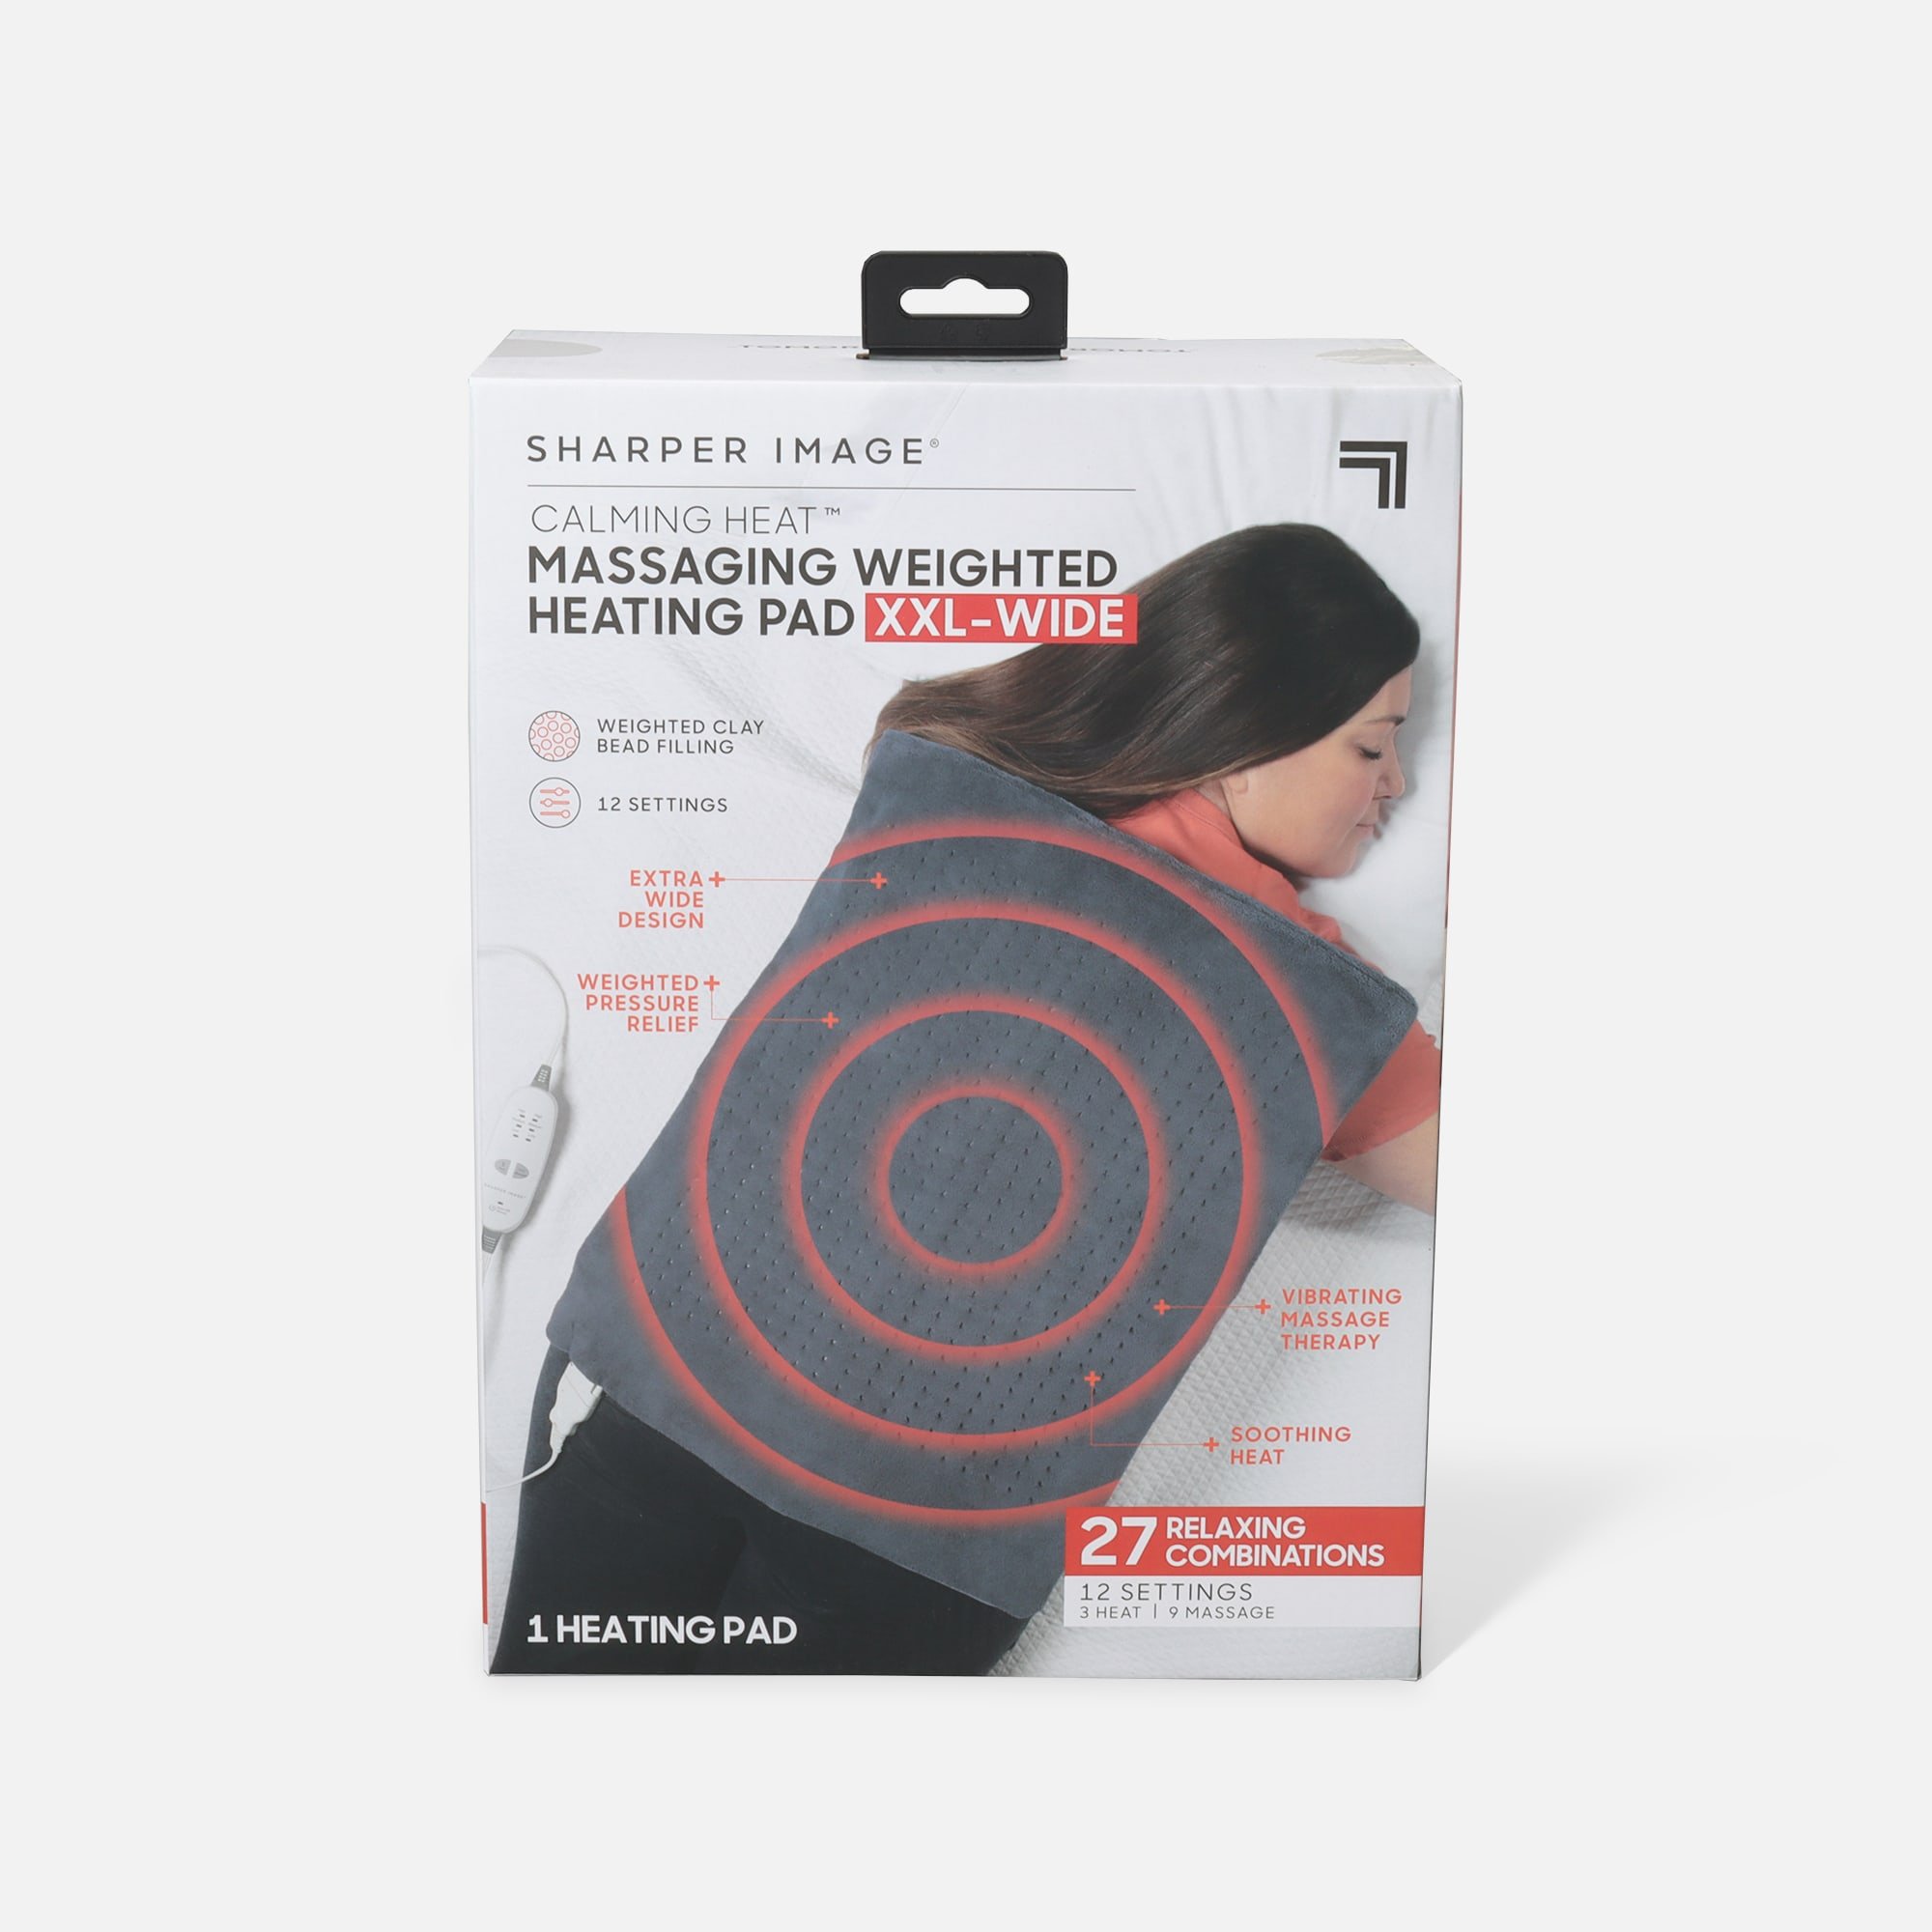 Sharper Image Massaging Weighted Heating Pad